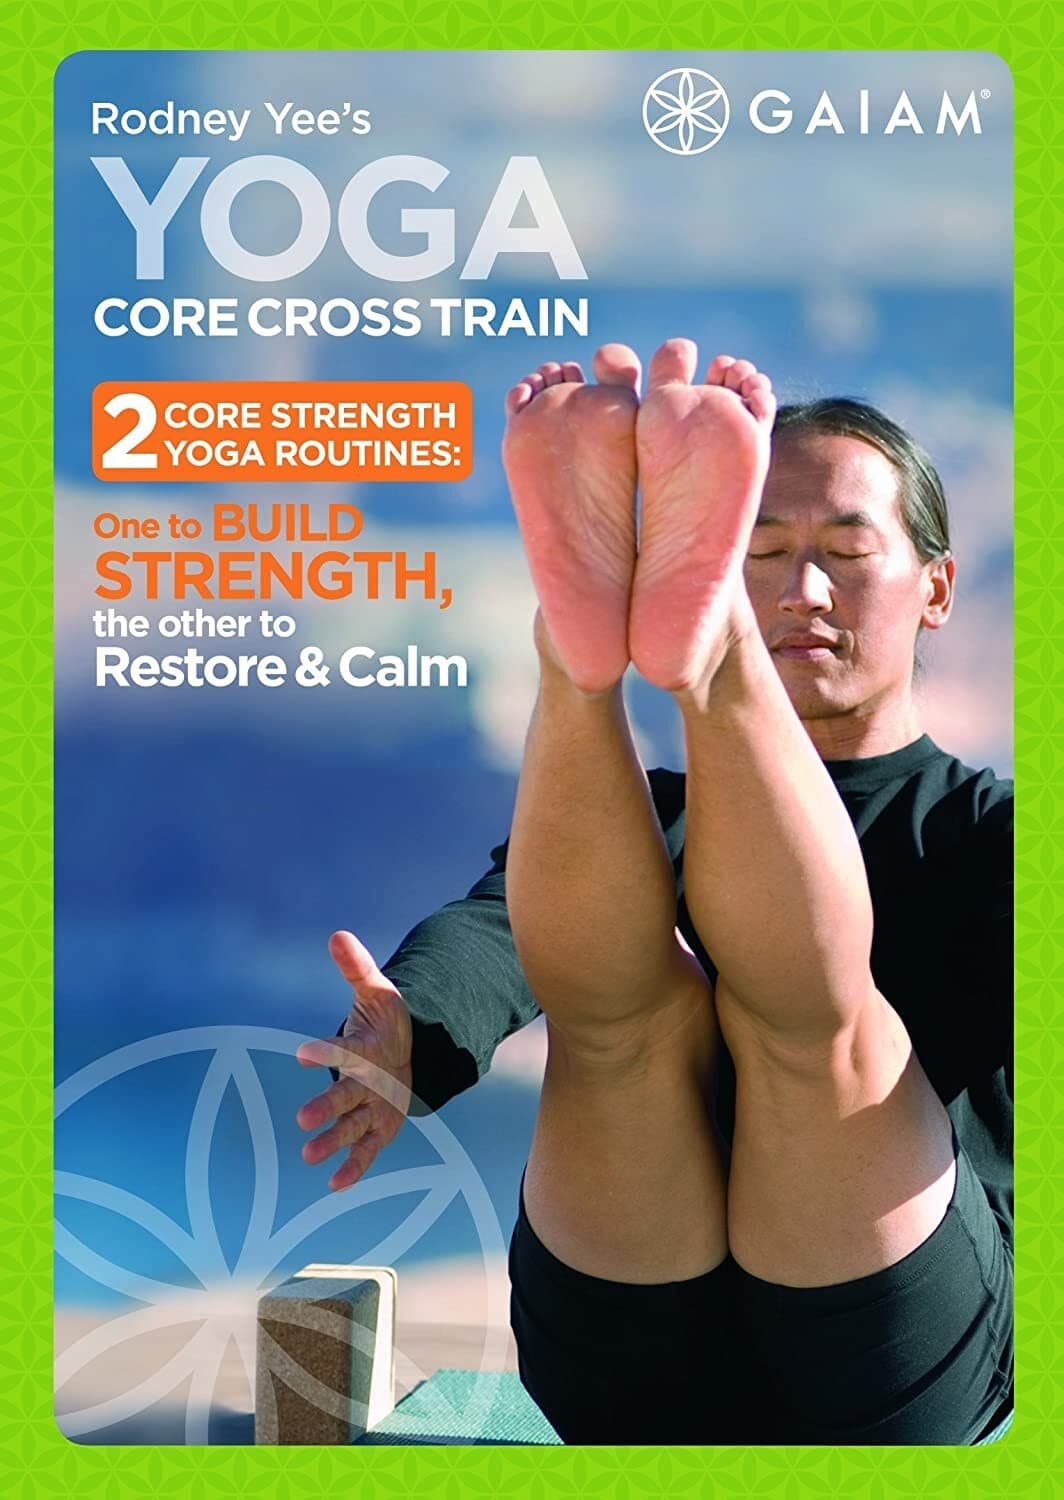 Rodney Yee's Yoga Core Cross Train - 1 Yoga for the Core